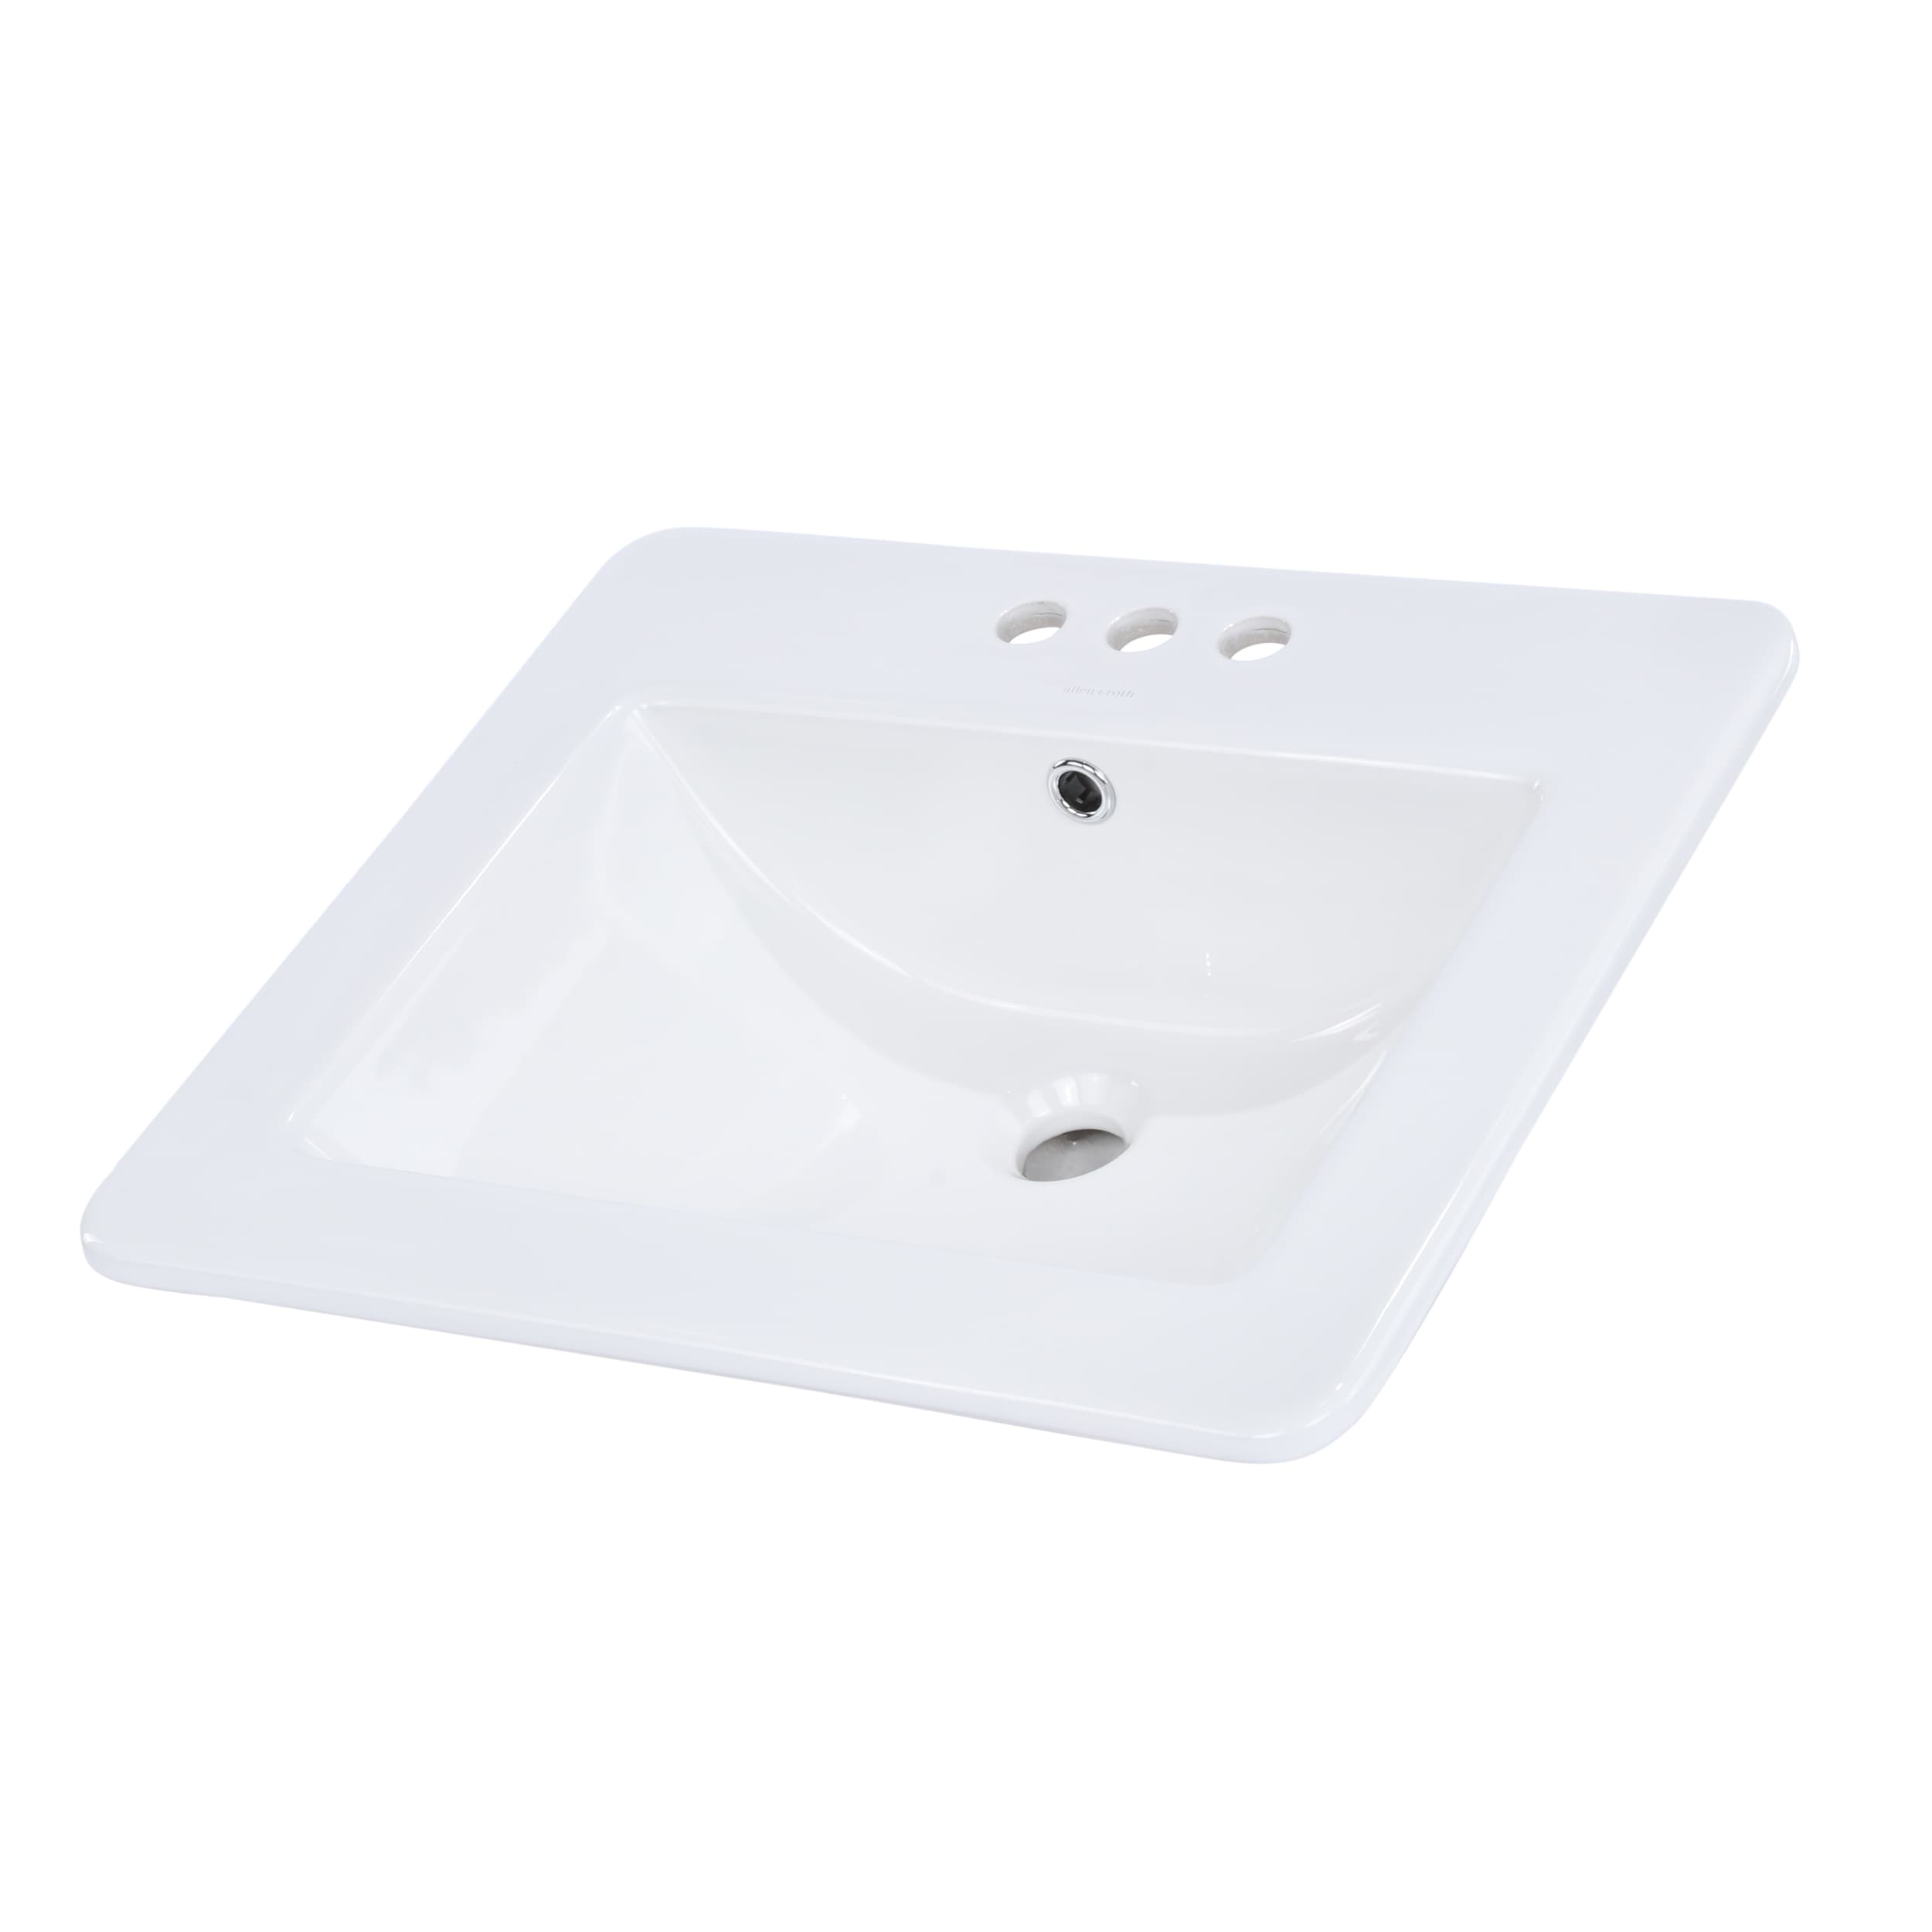 allen + roth white drop-in rectangular traditional bathroom sink